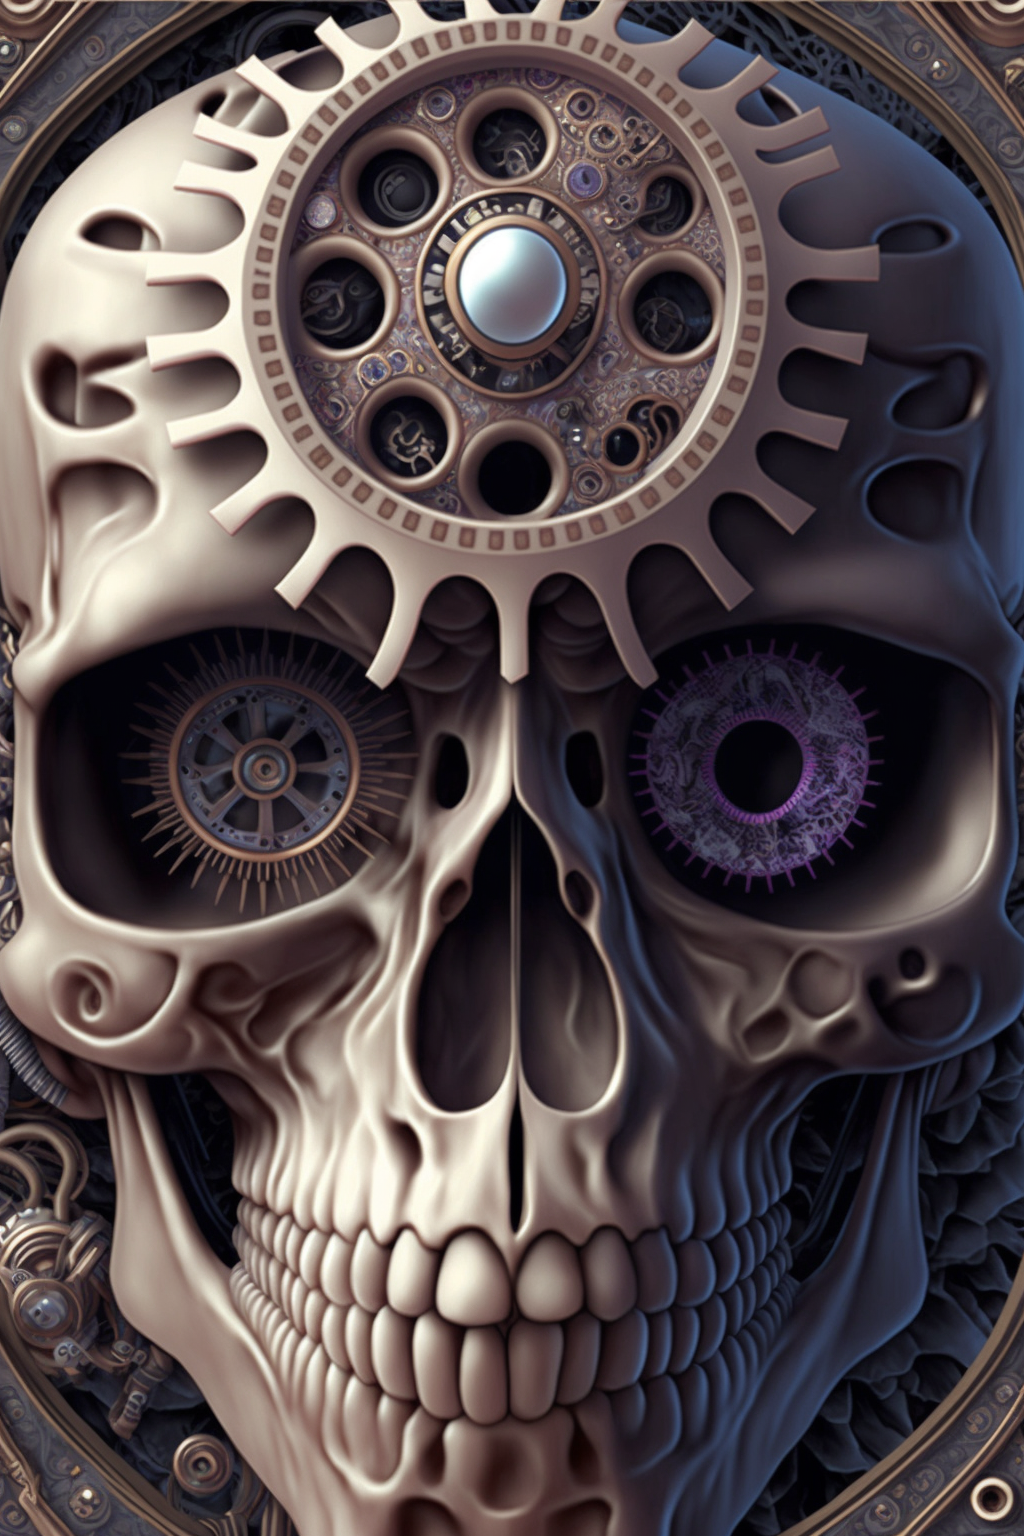 Clockwork skull